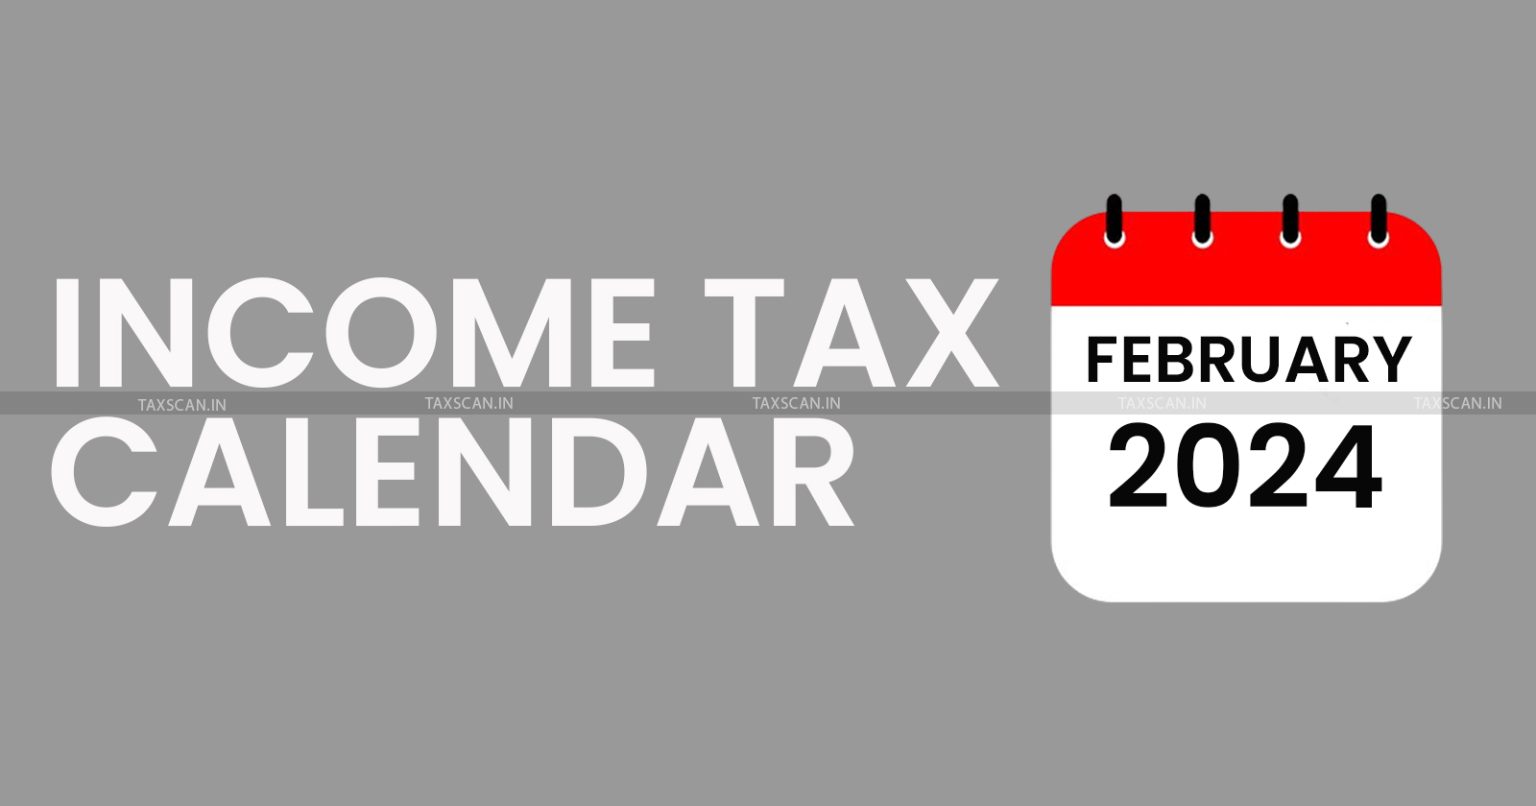 Tax Due Date Calendar for February 2024